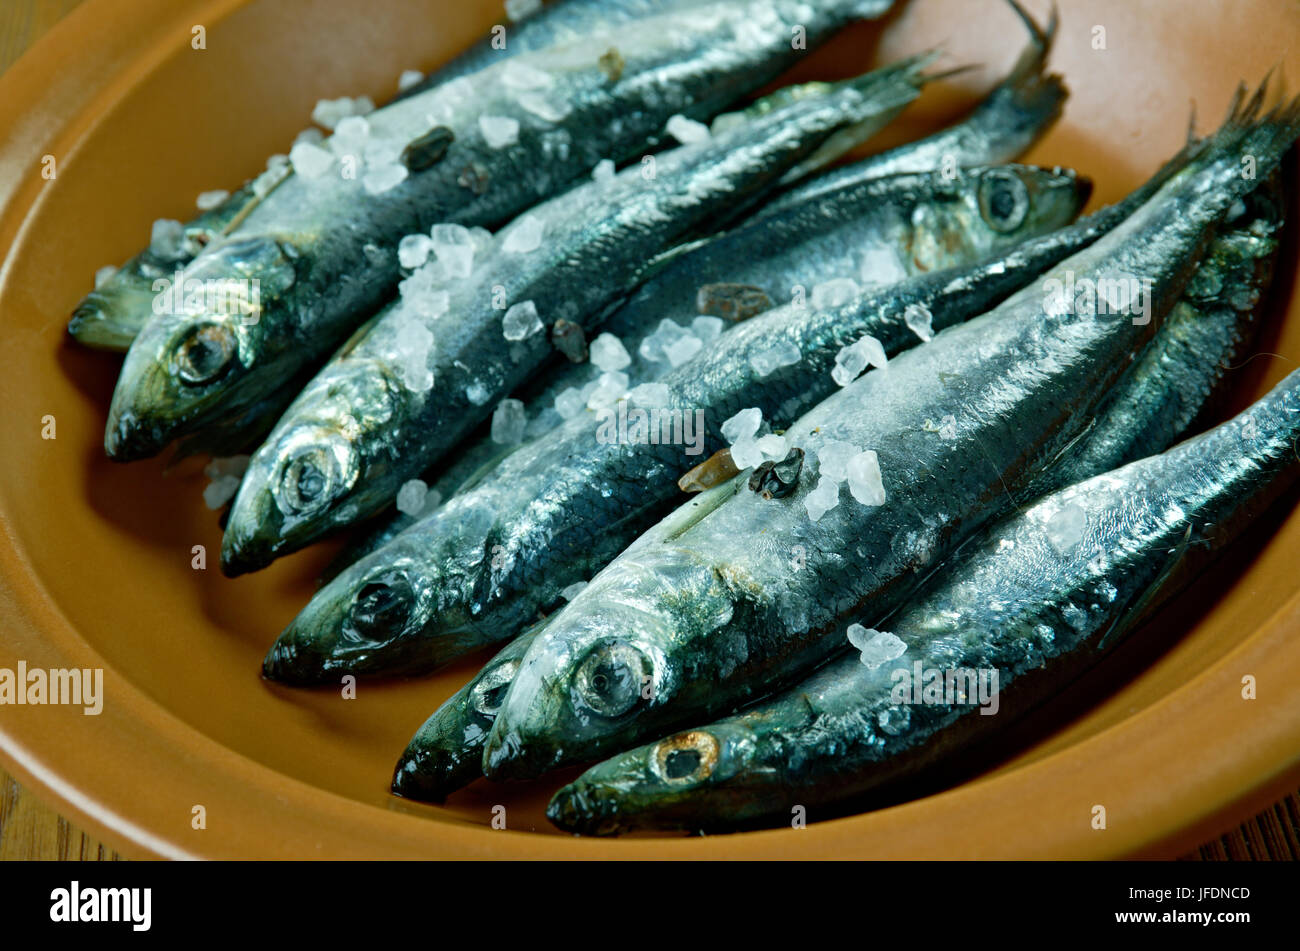 Surstromming Swedish  sour herring Stock Photo